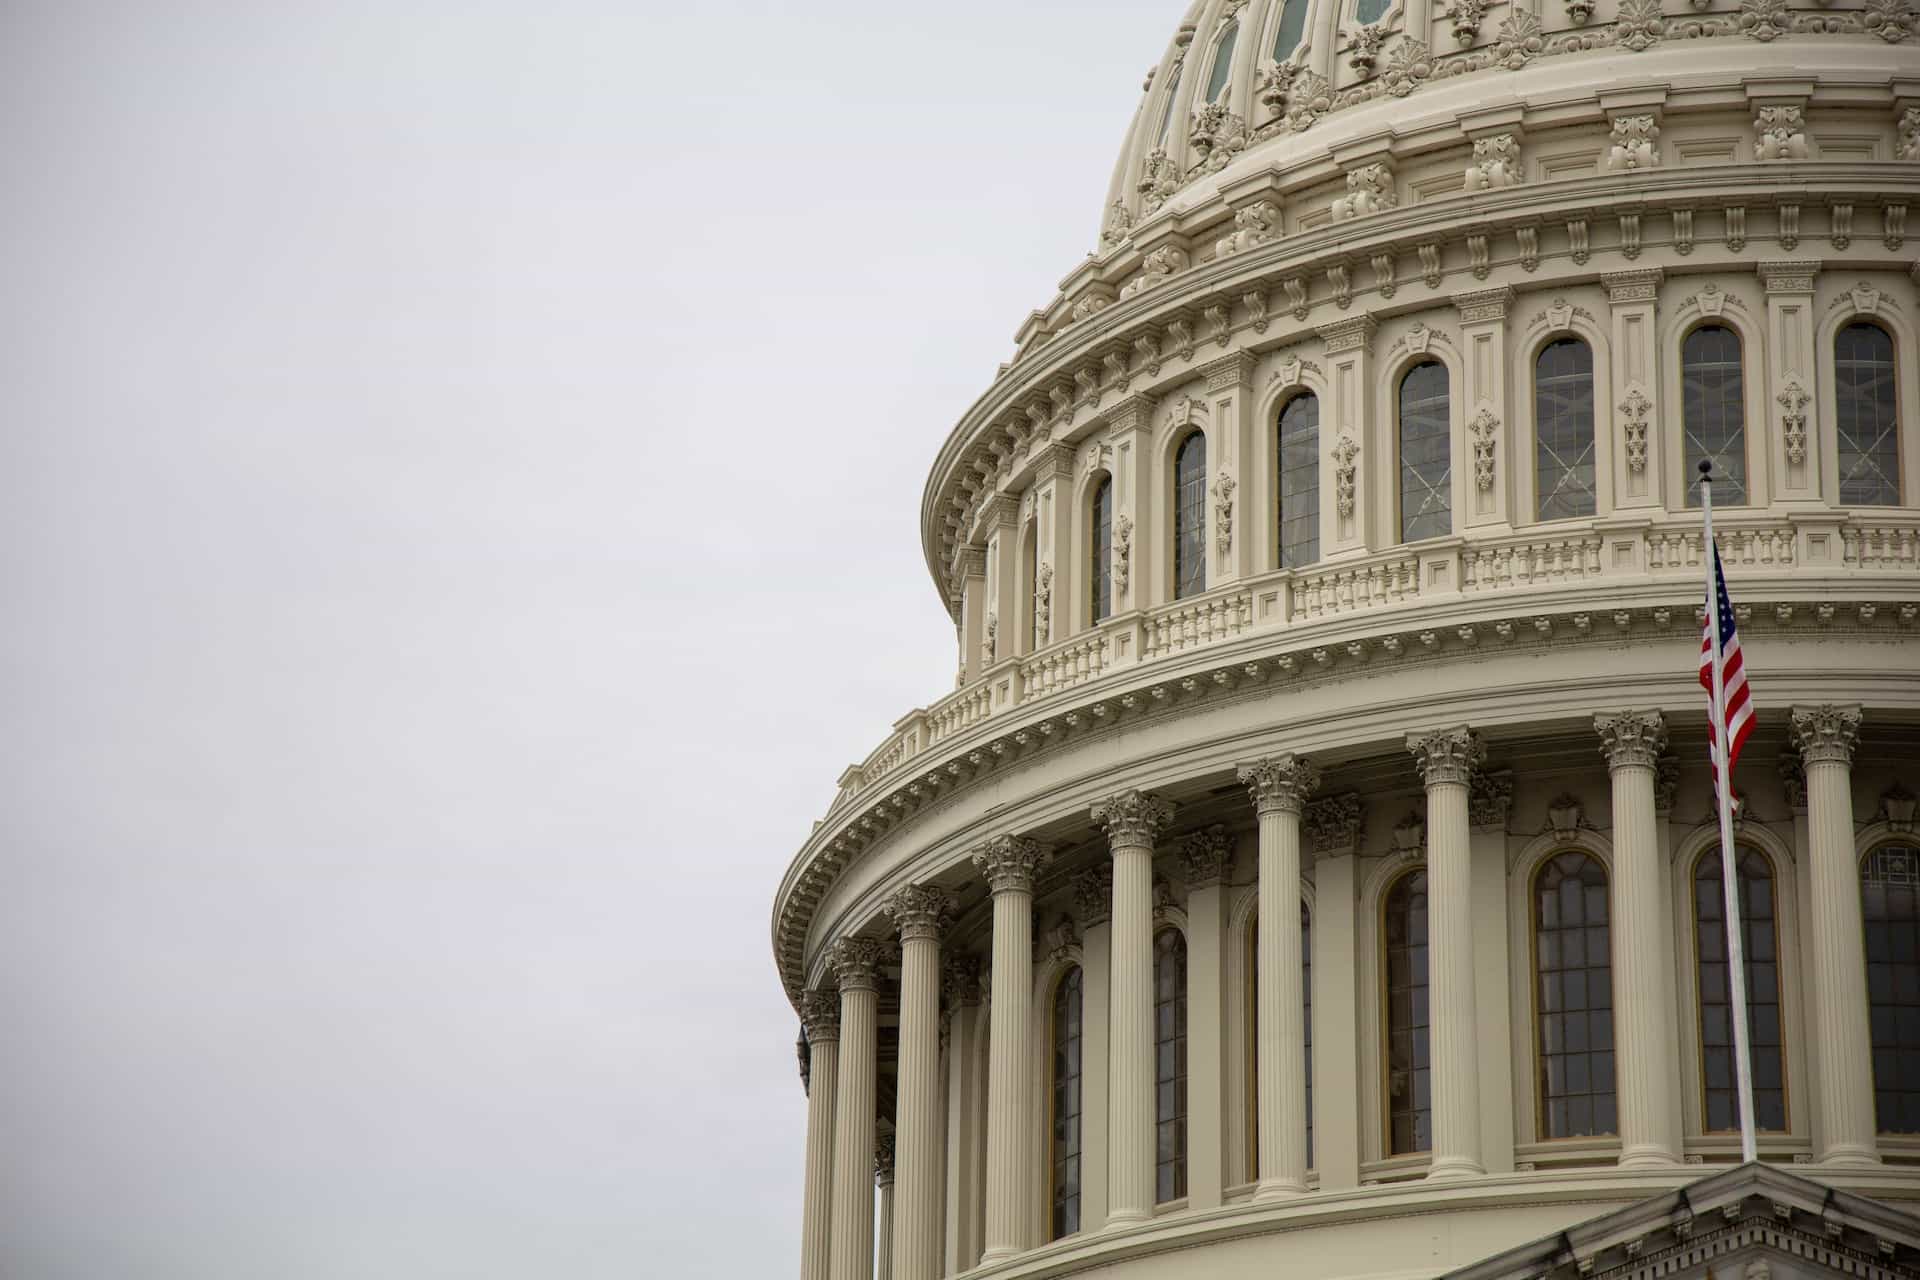 Half of the rotunda of the US Senate building in the nation’s capital, Washington, D.C.